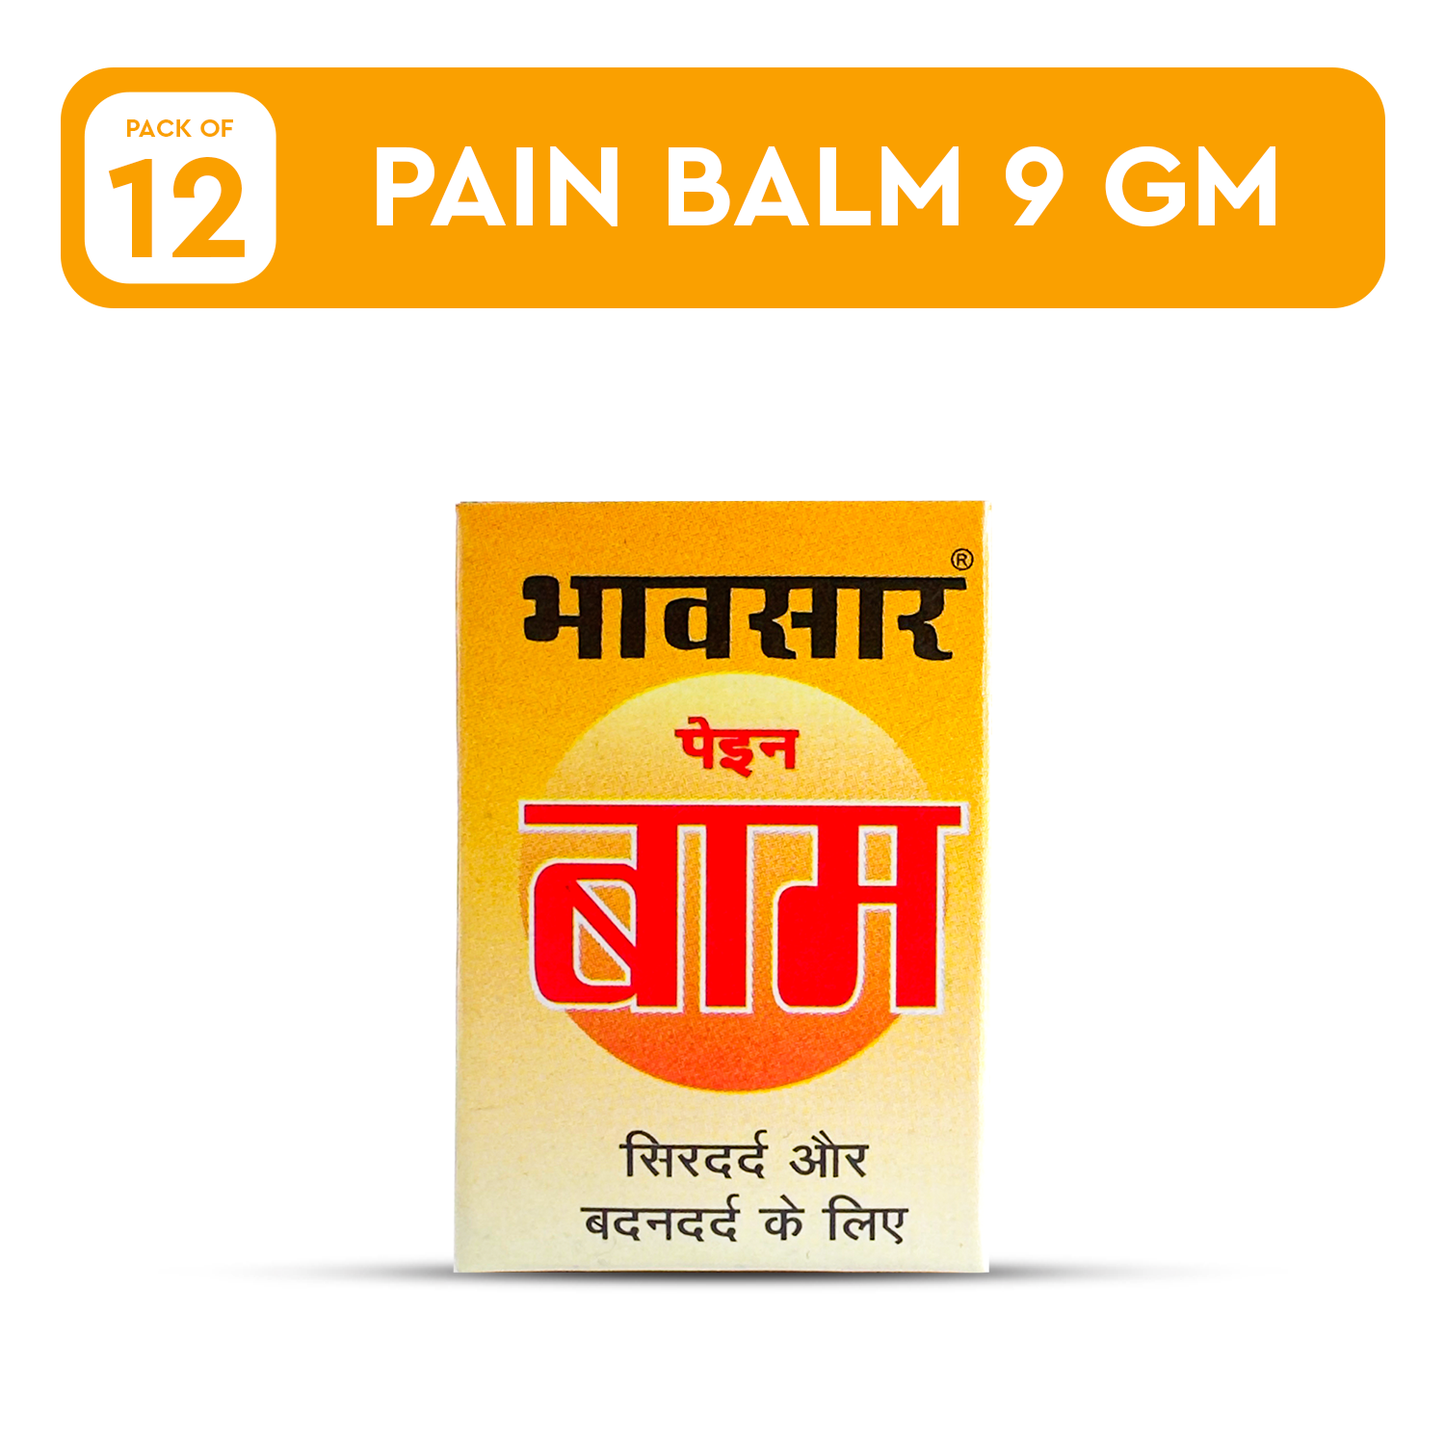 BHAWSAR Pain Balm 9gm